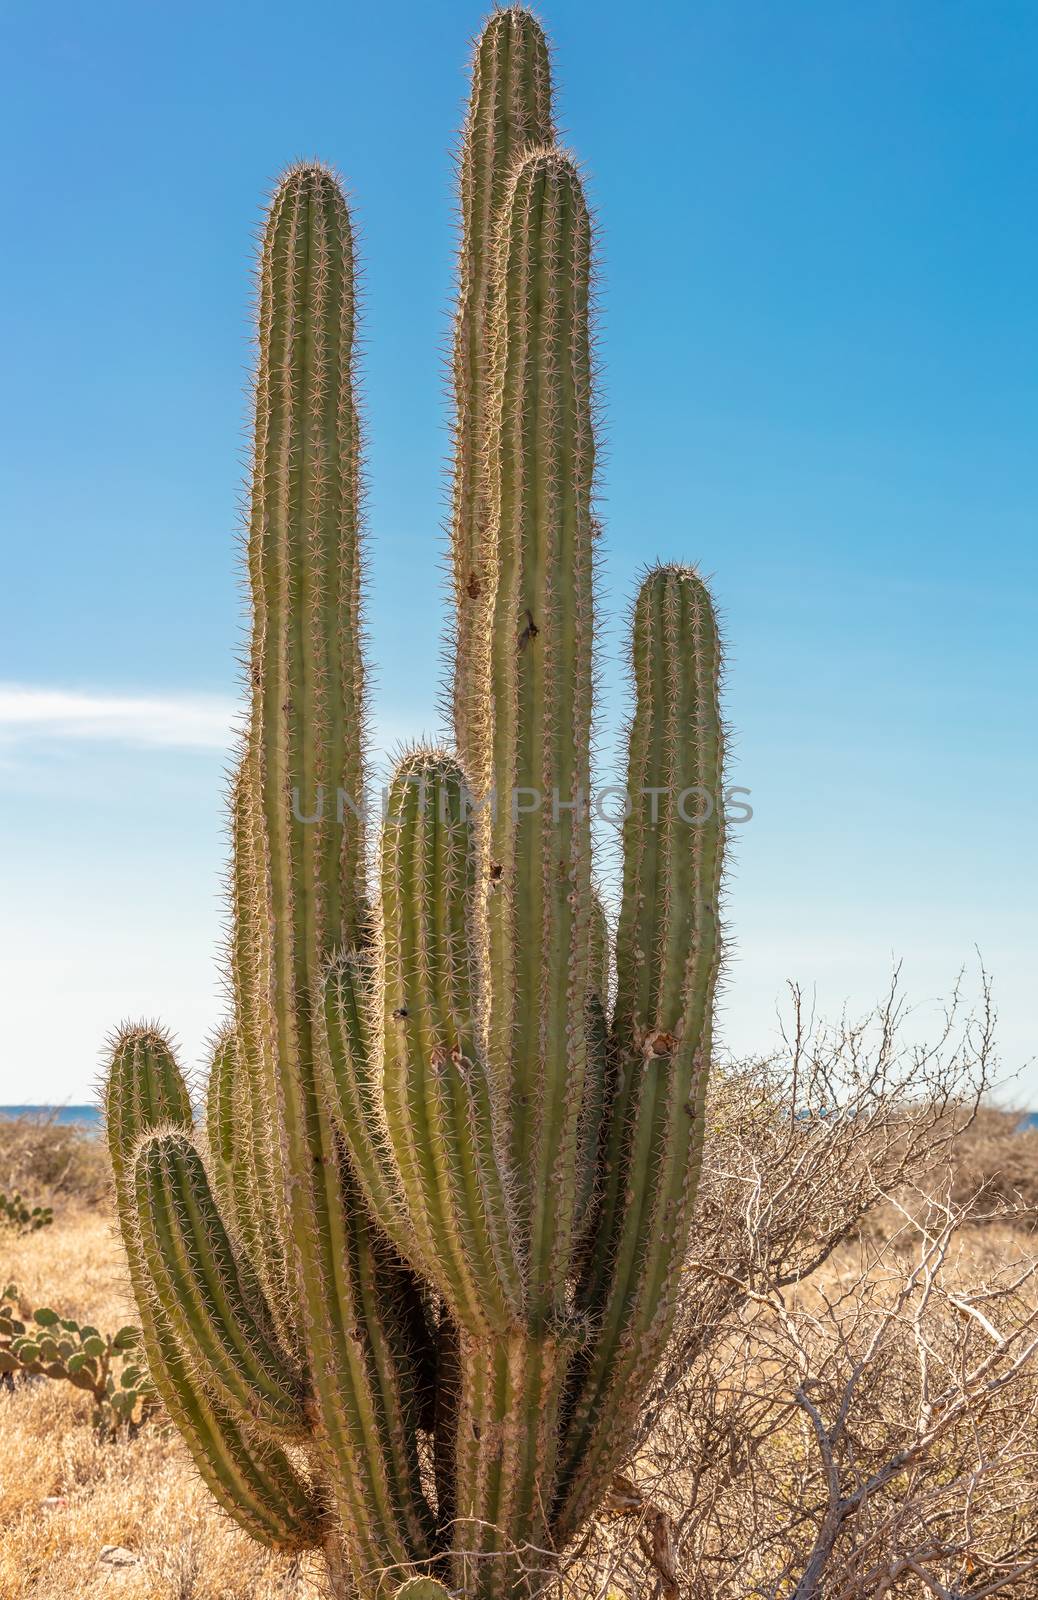 Cactus growing in dry environment in Aruba